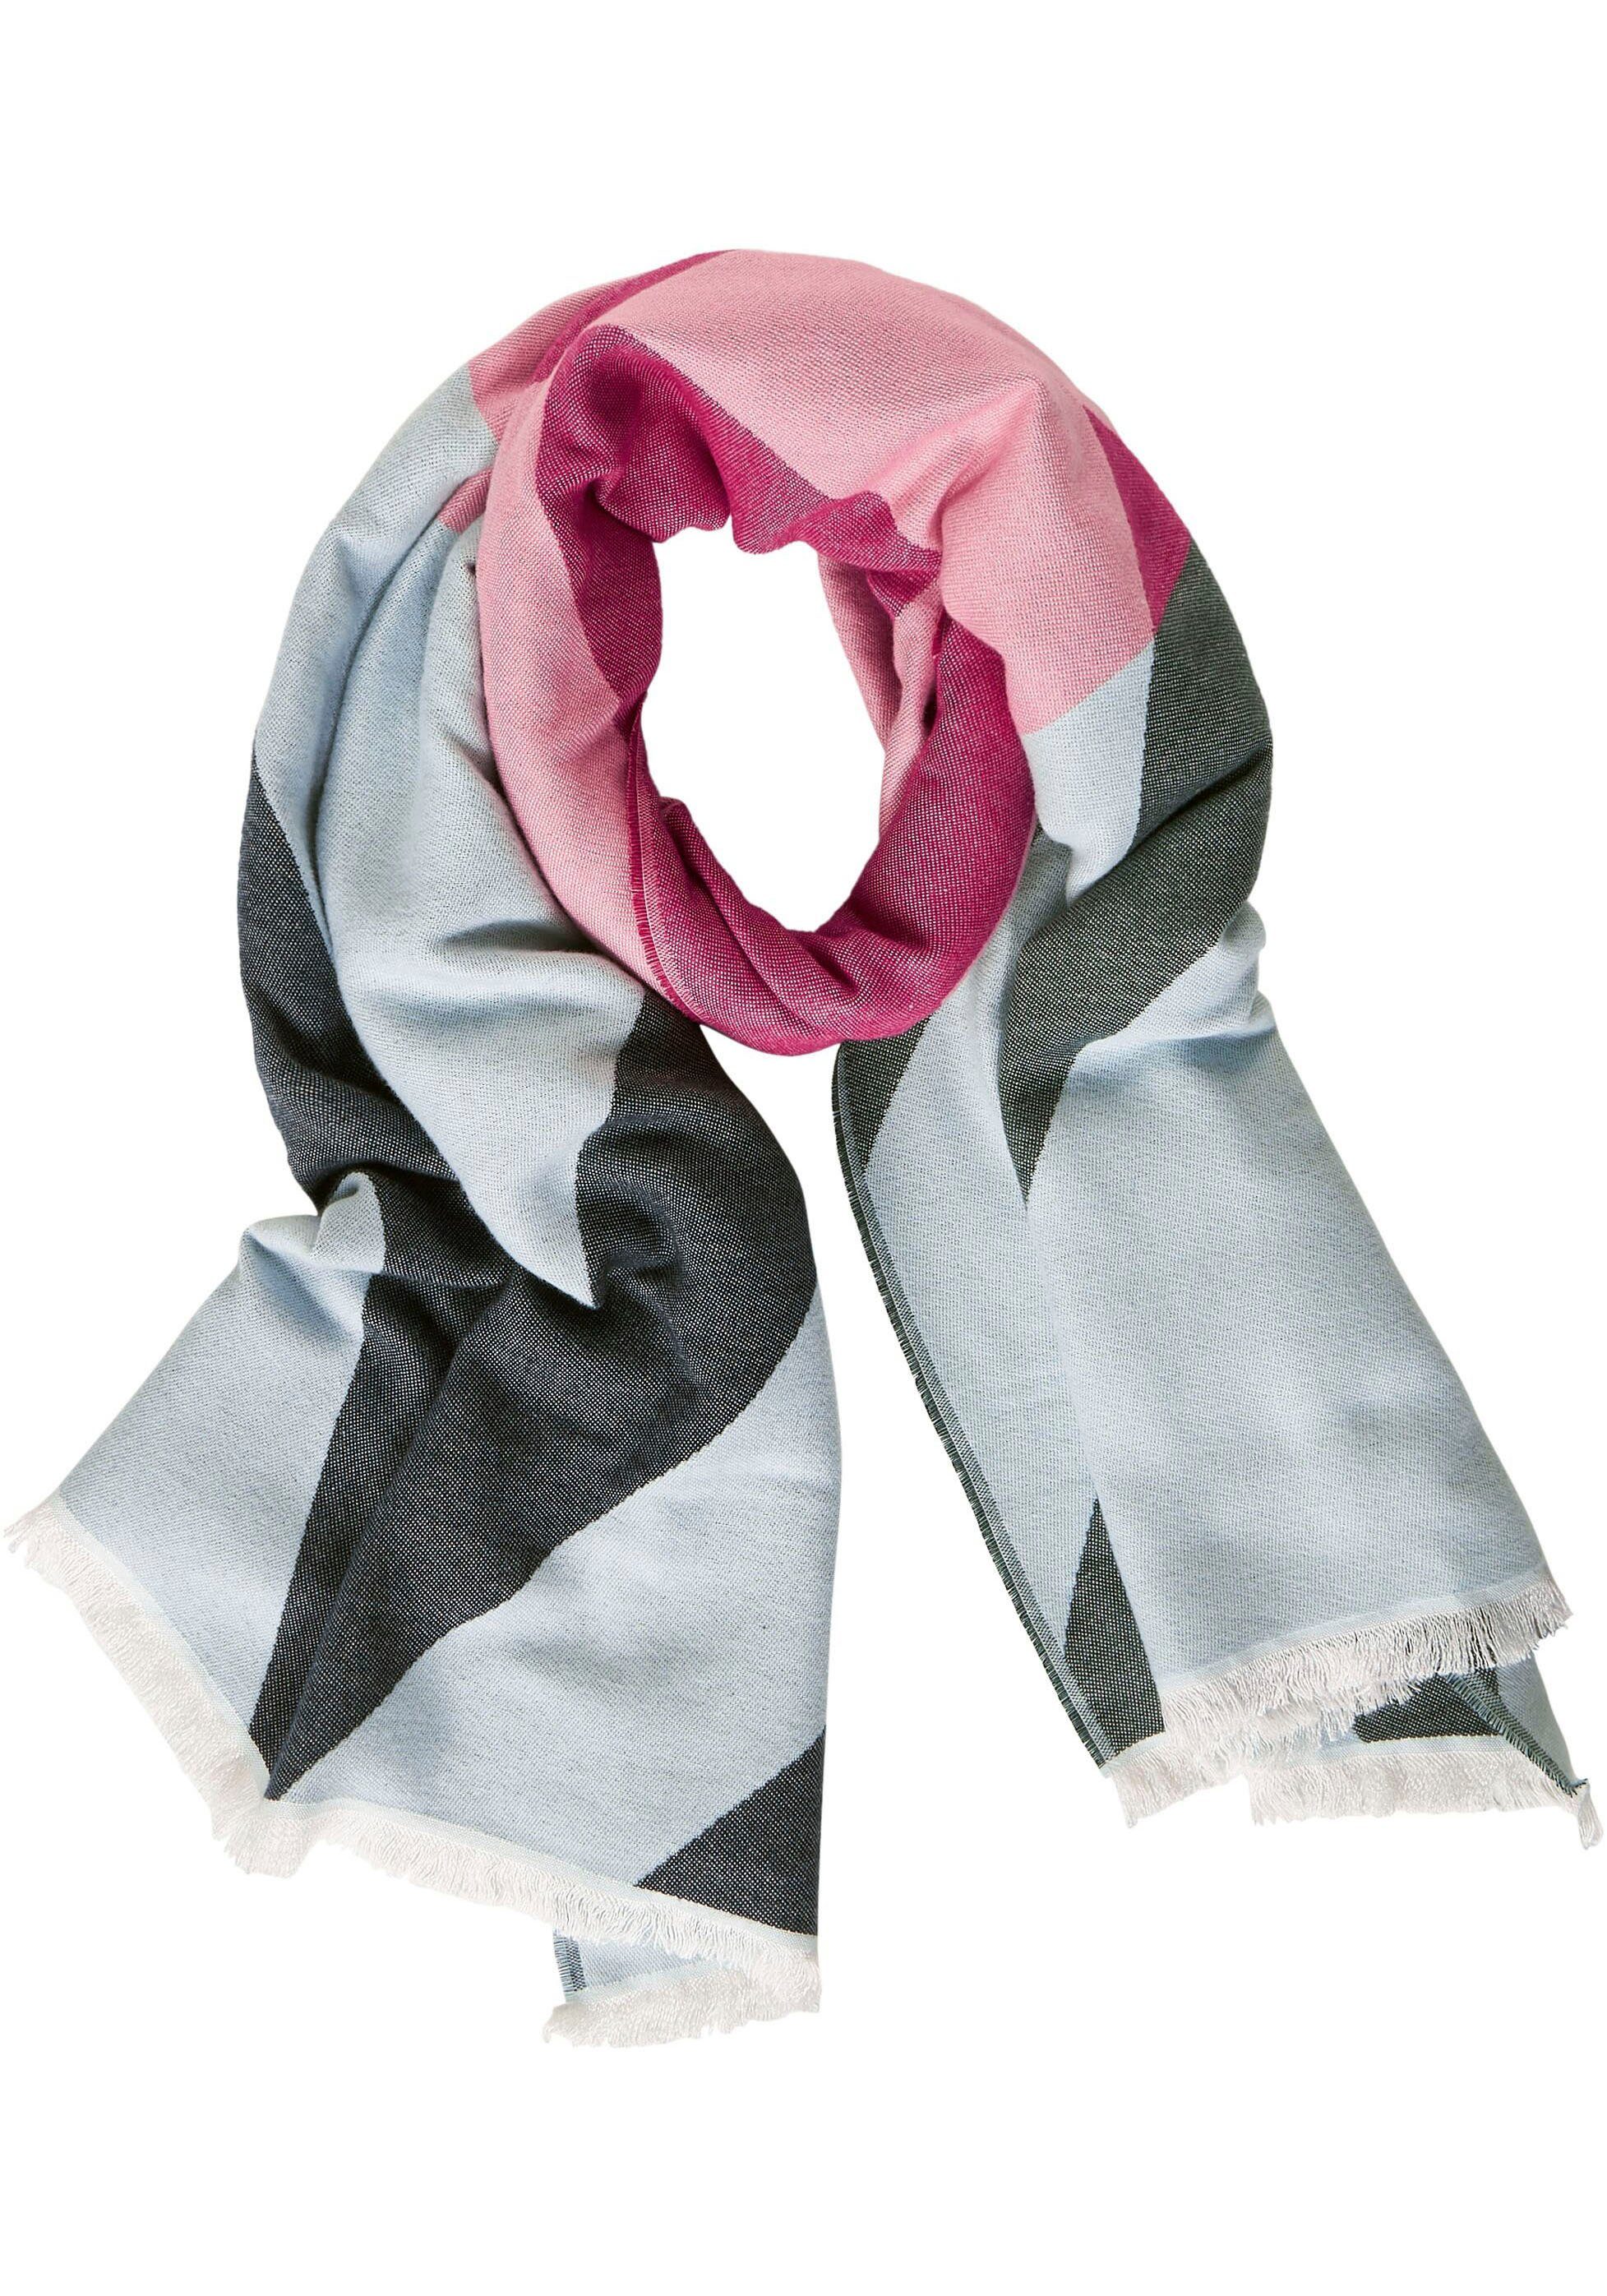 Ikat-Muster Schal, STREET mehrfarbigem ONE mit